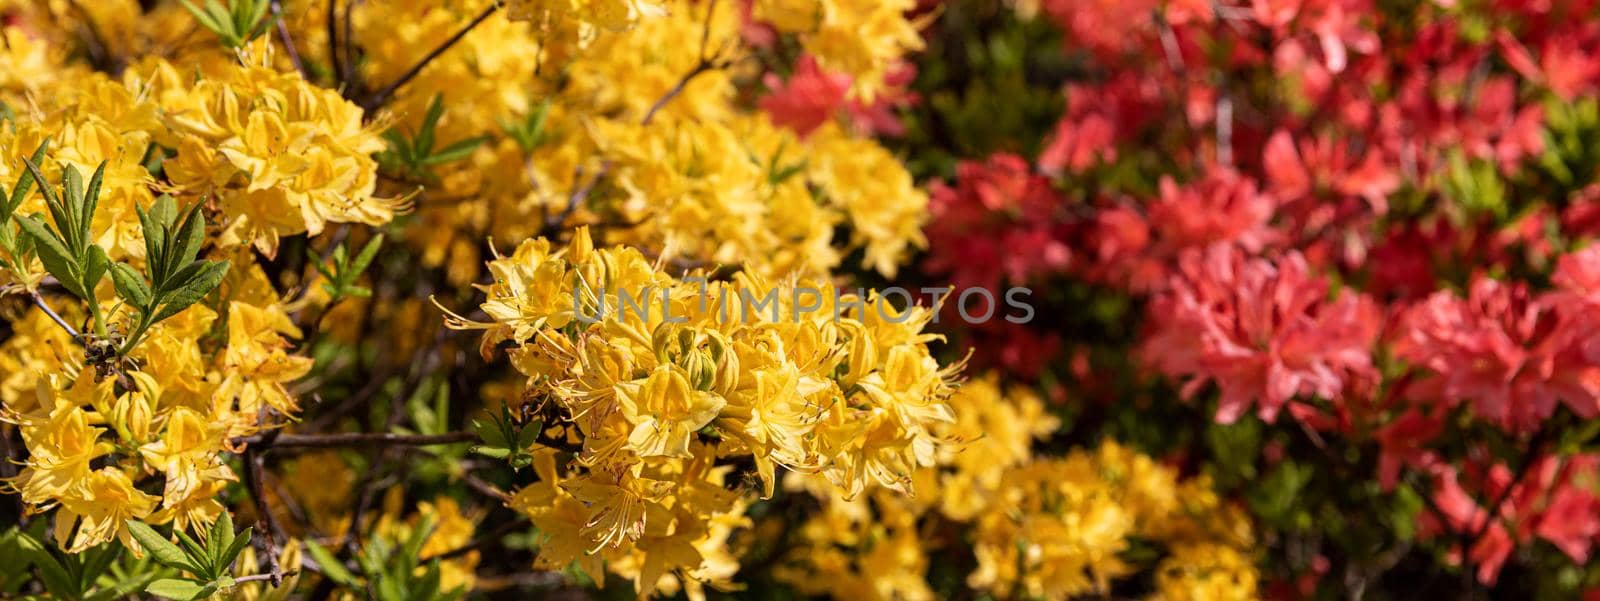 yellow flowers of azalea by palinchak